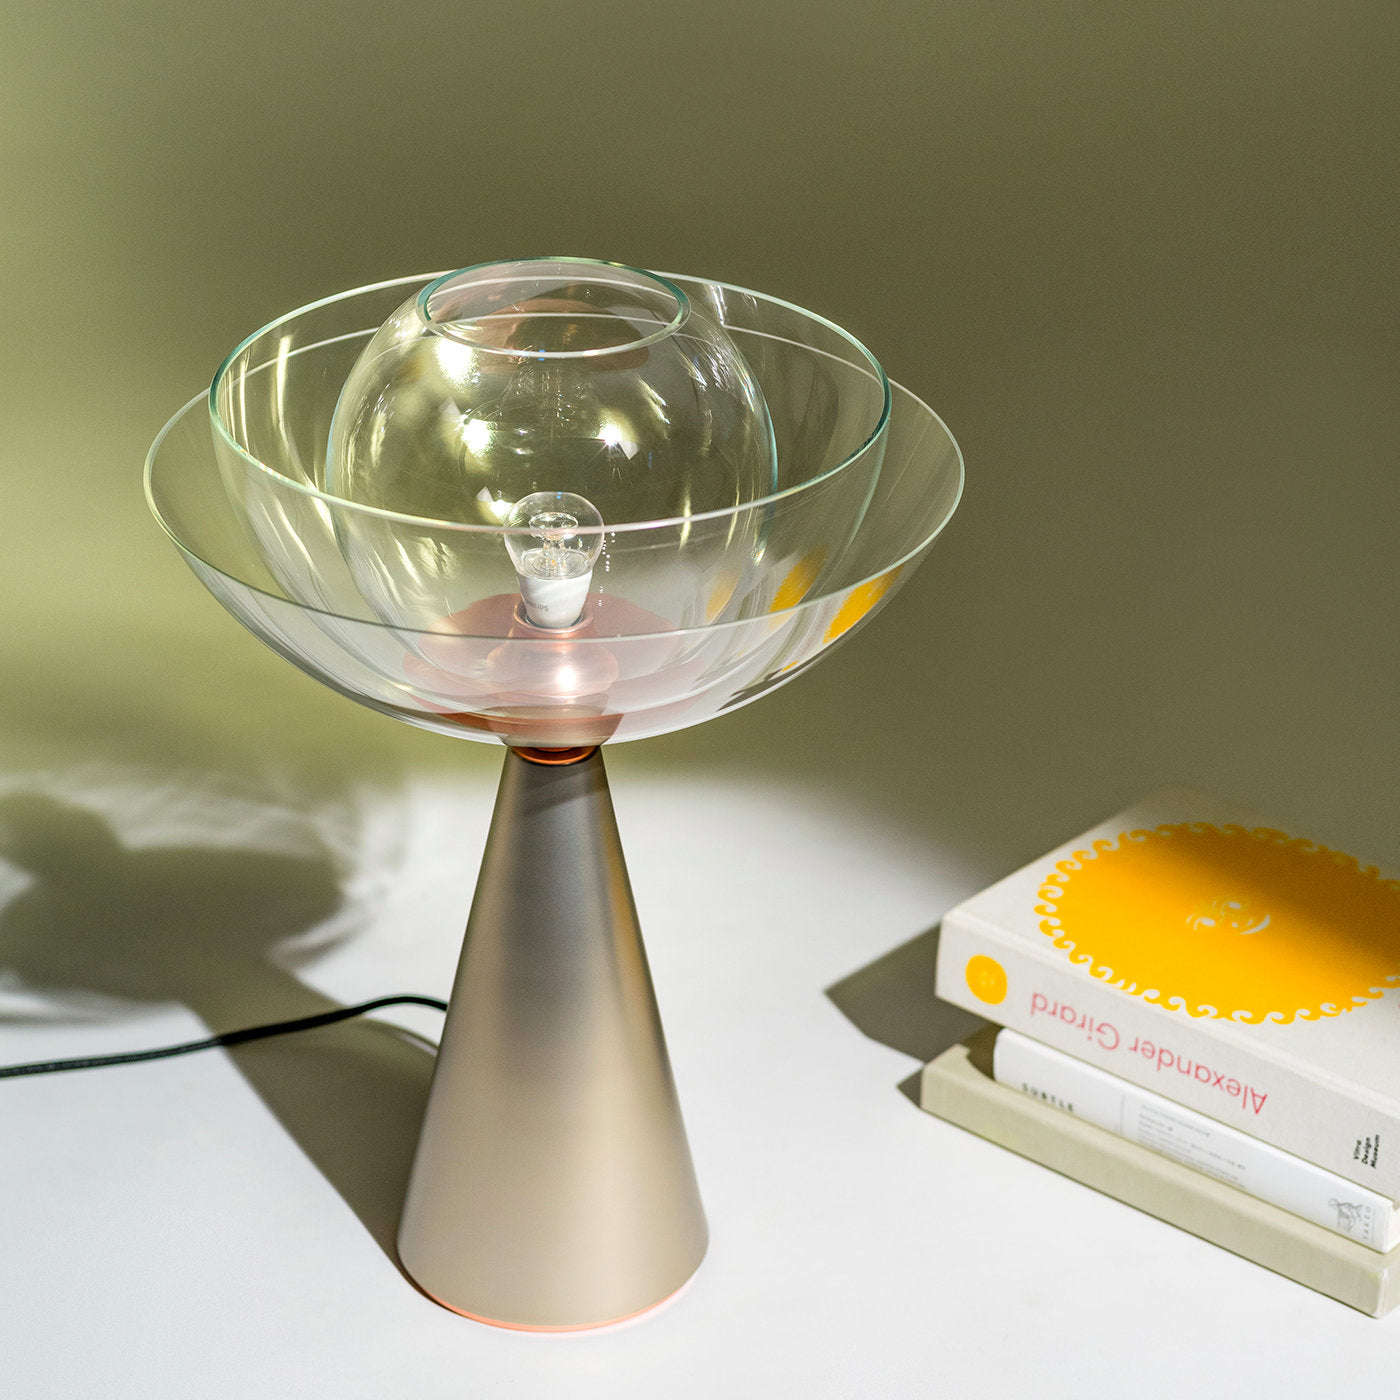 Lotus nickel table lamp - Alternative view 1